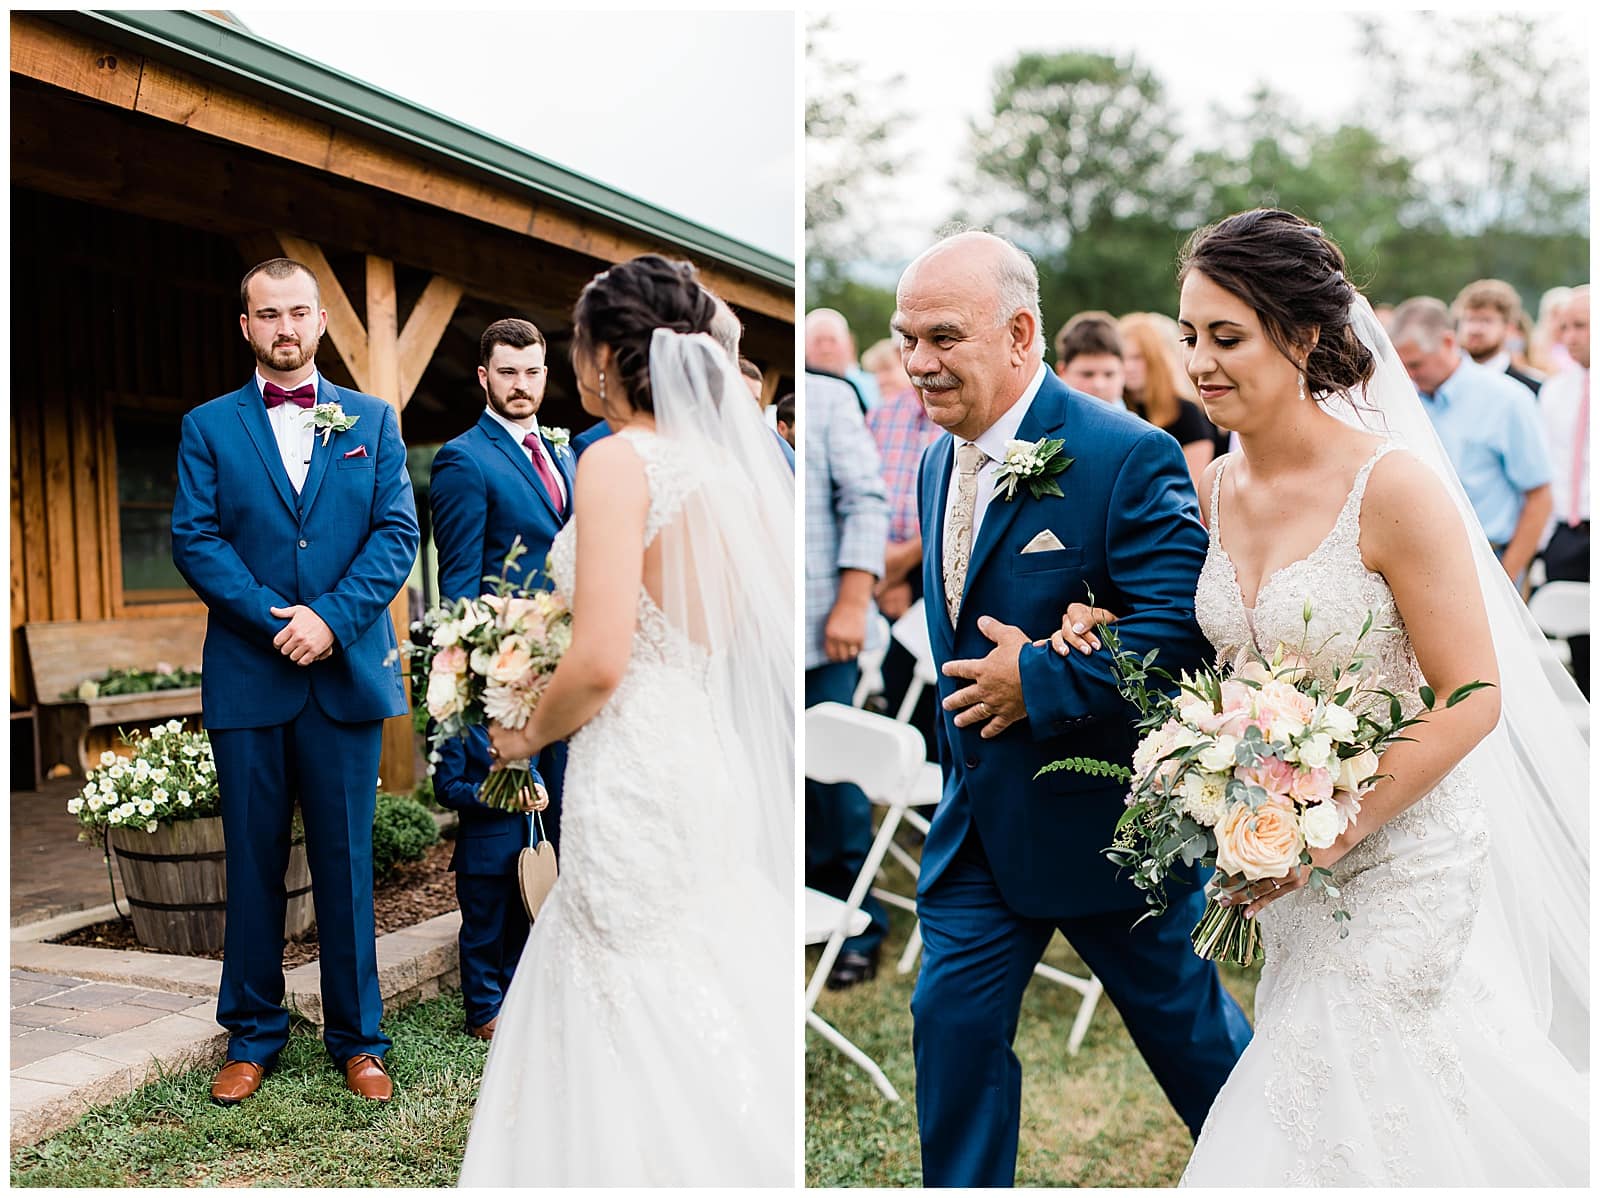 Danielle-Defayette-Photography-Middle-Fork-Barn-Wedding-VA-2020_0025.jpg